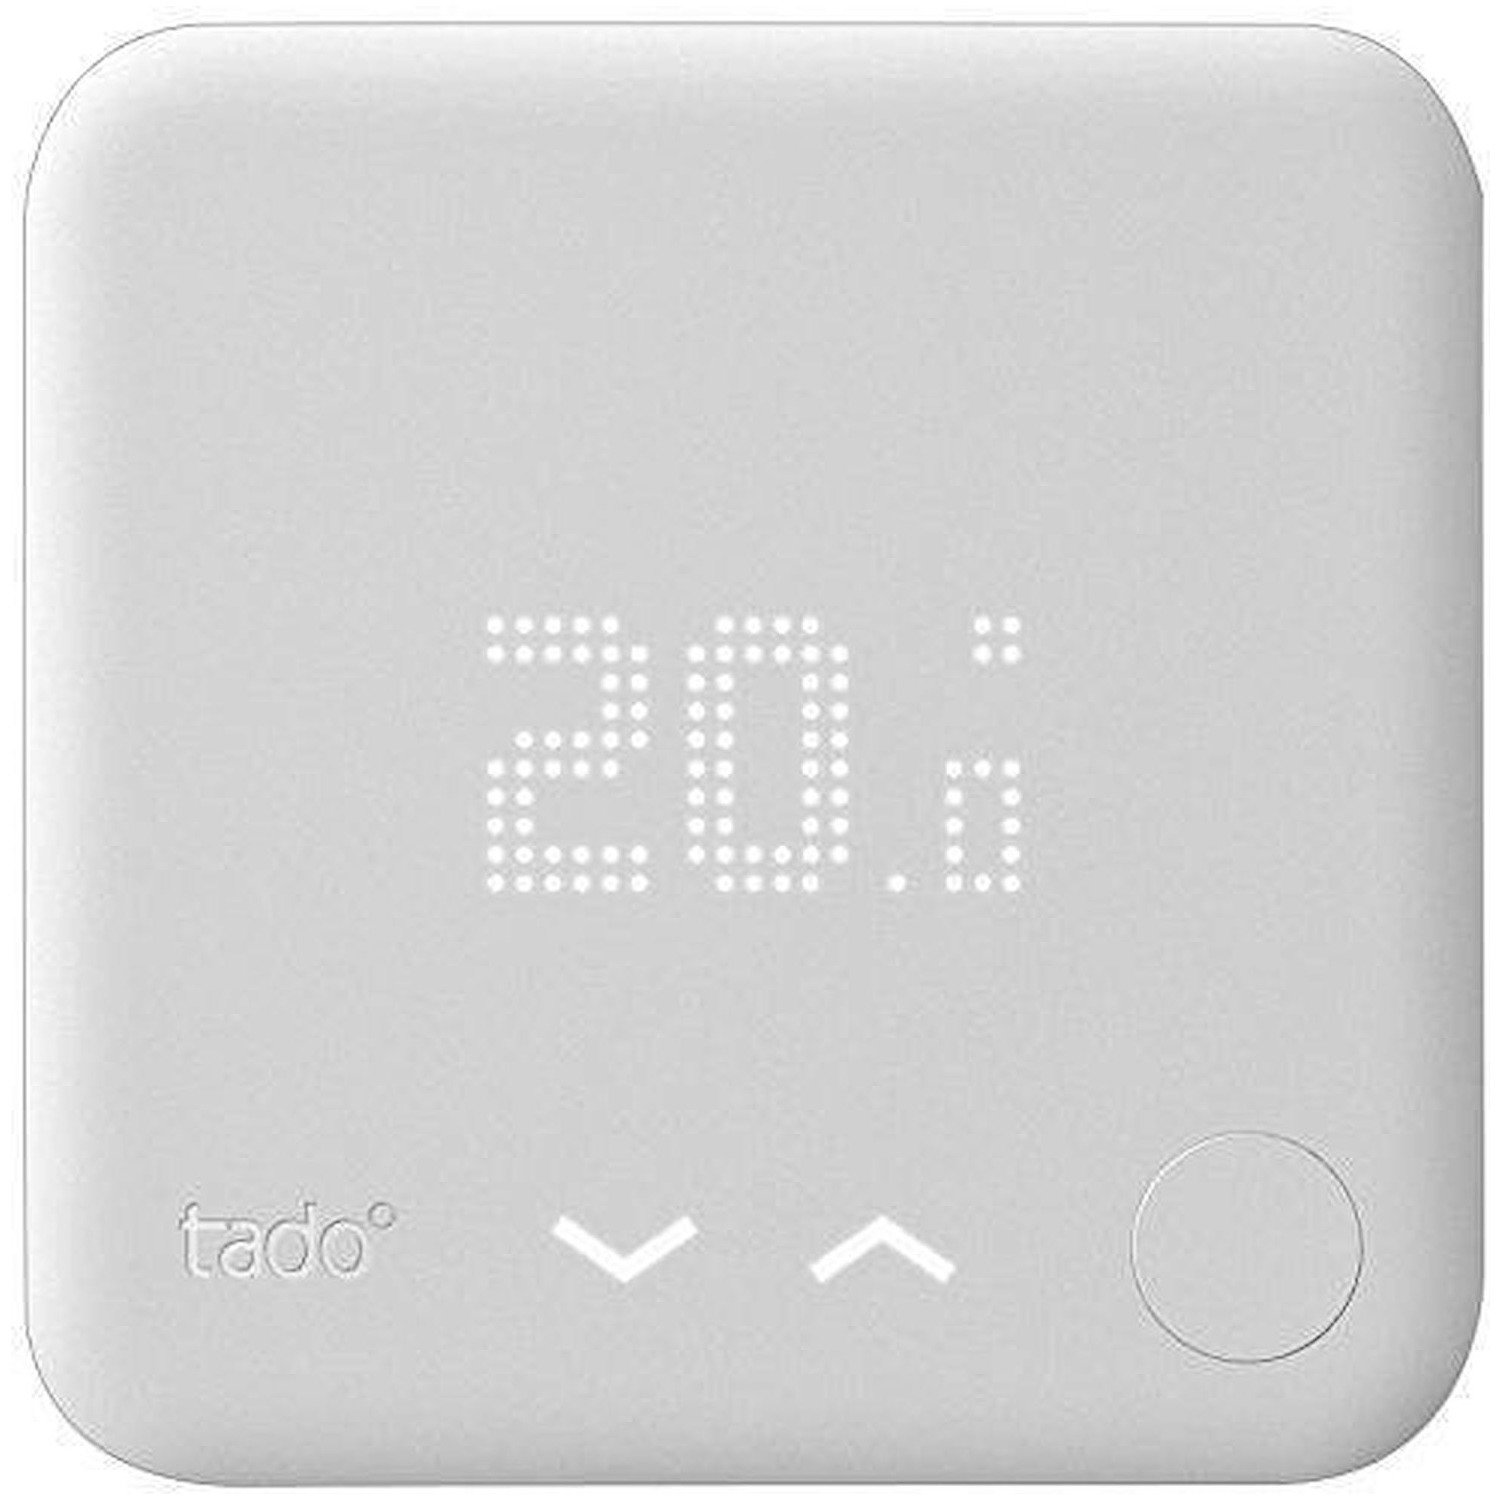 https://images.dimostore.it/1500/termostato-intelligente-tado-per-riscaldamento-ateatttadost.jpg